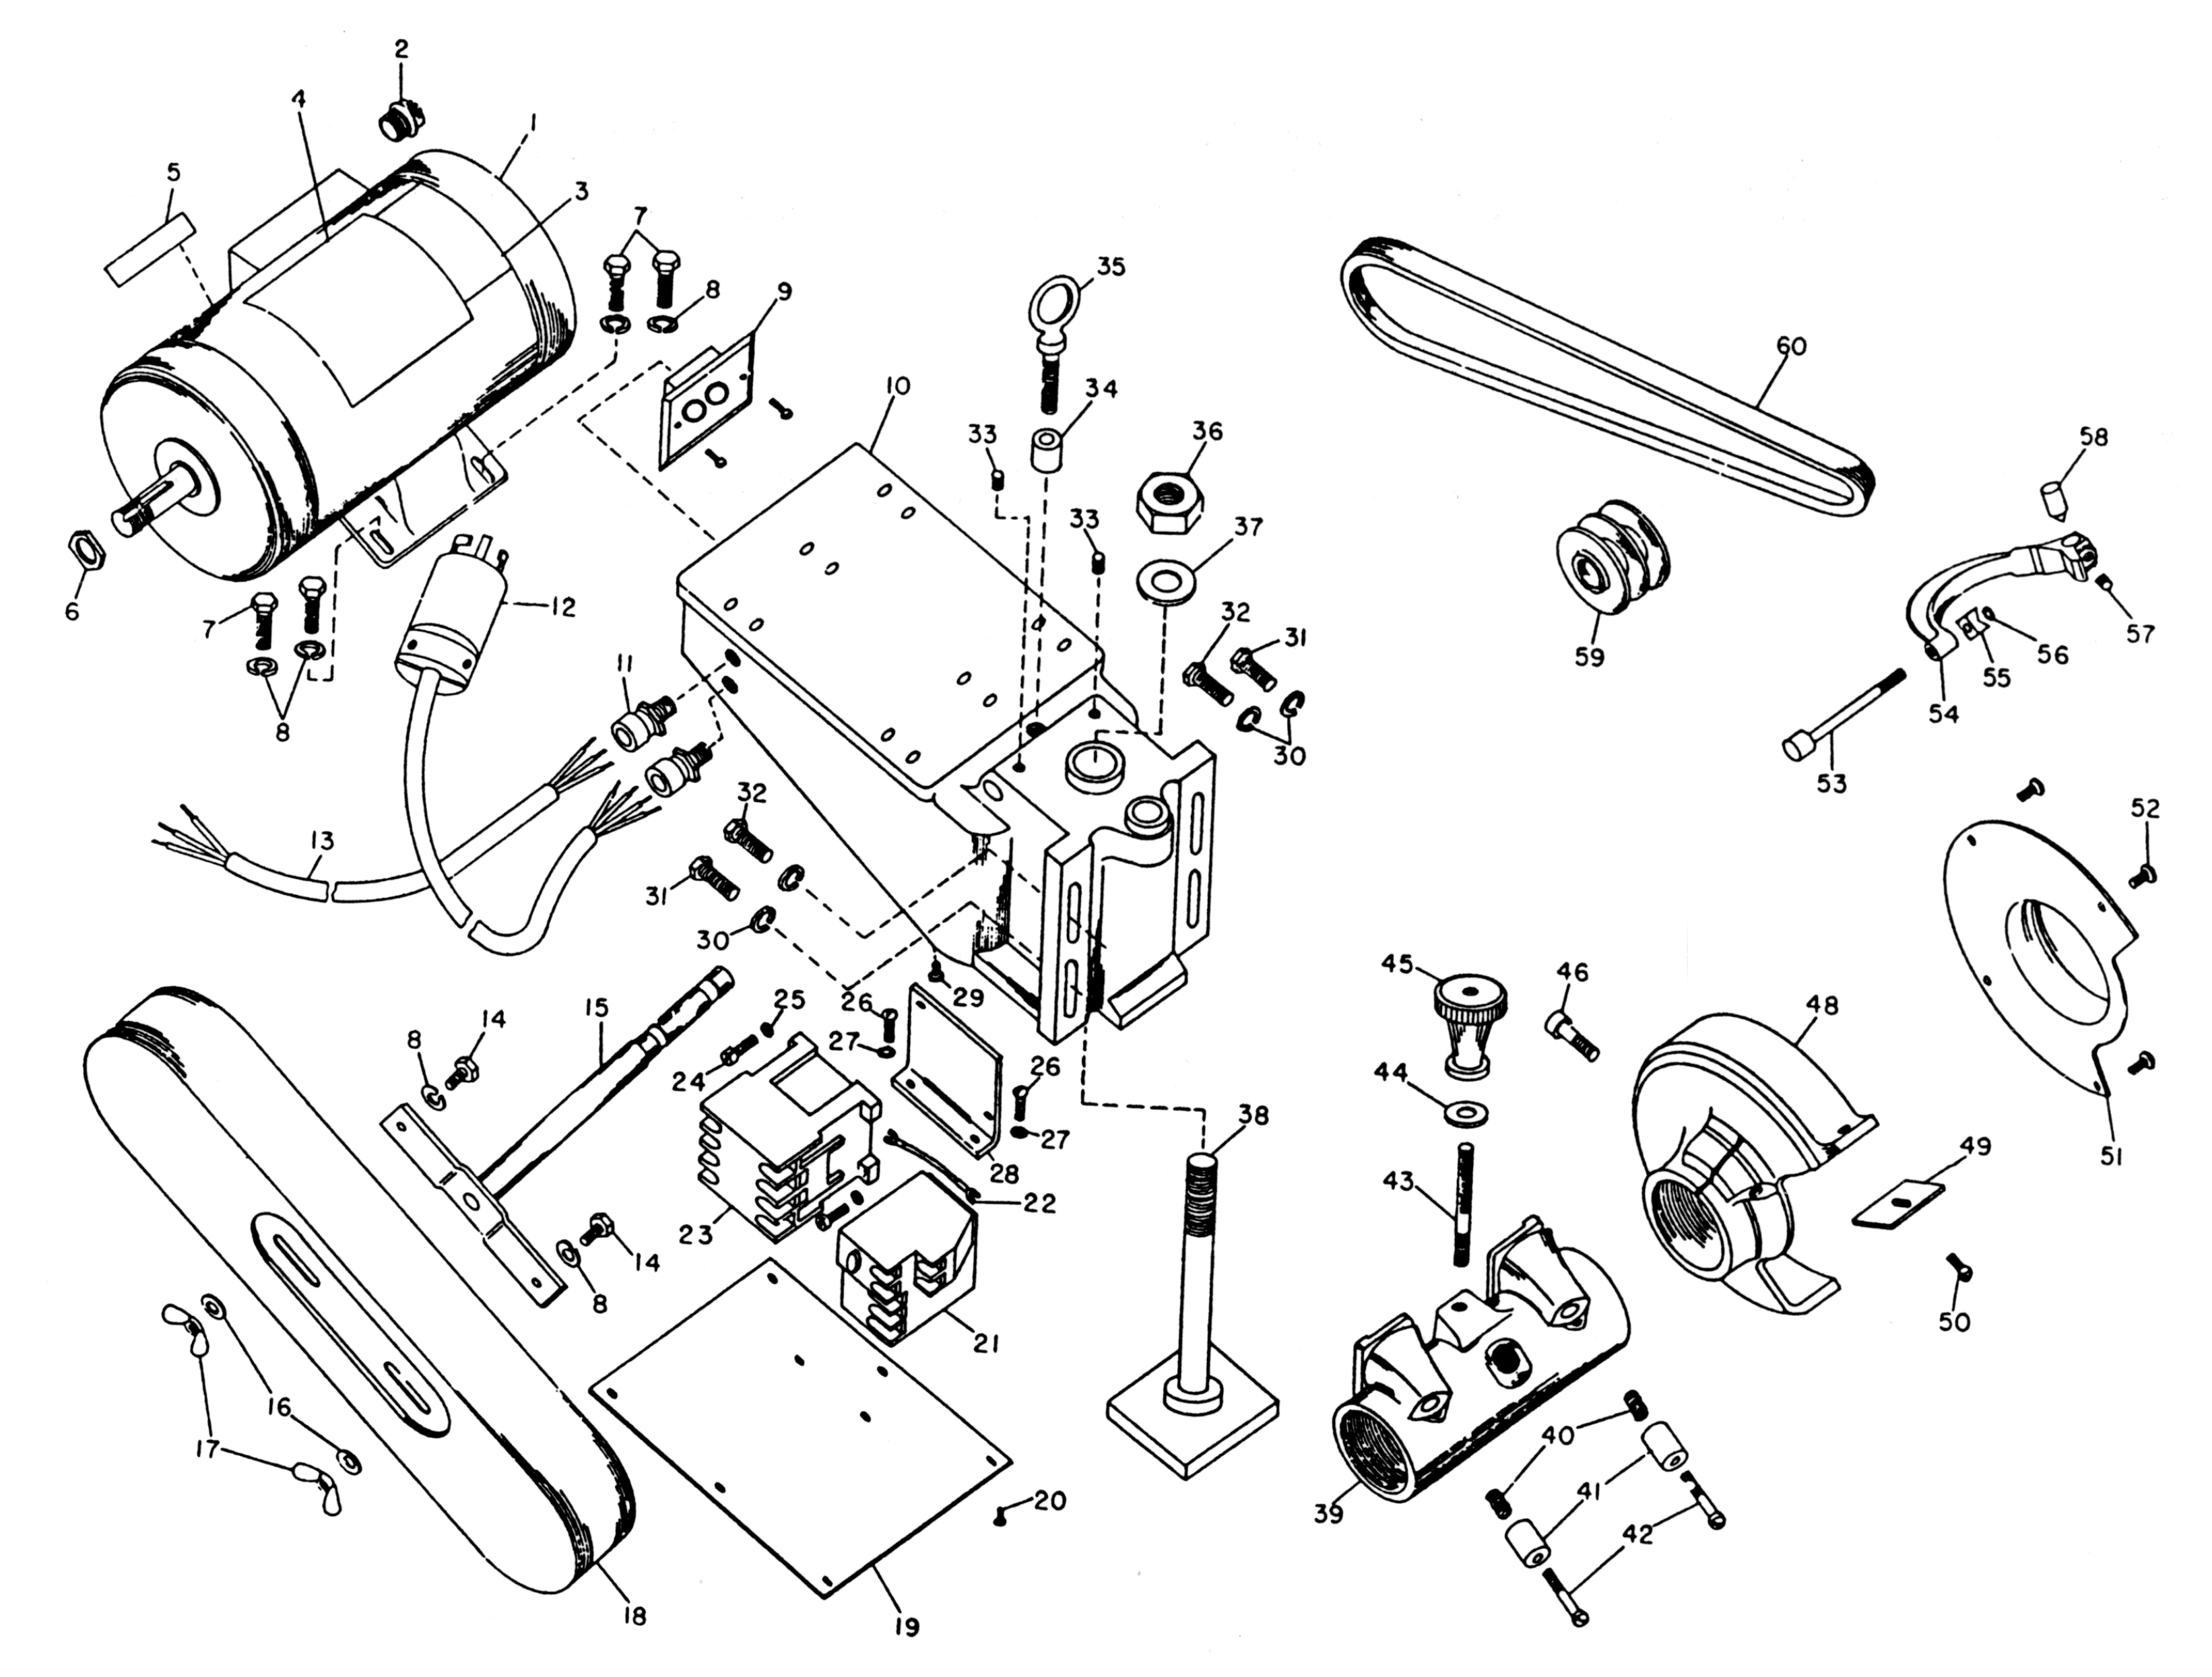 Tool Post Grinder Replacement Parts | Dumore Series 25 Tool Post Grinders